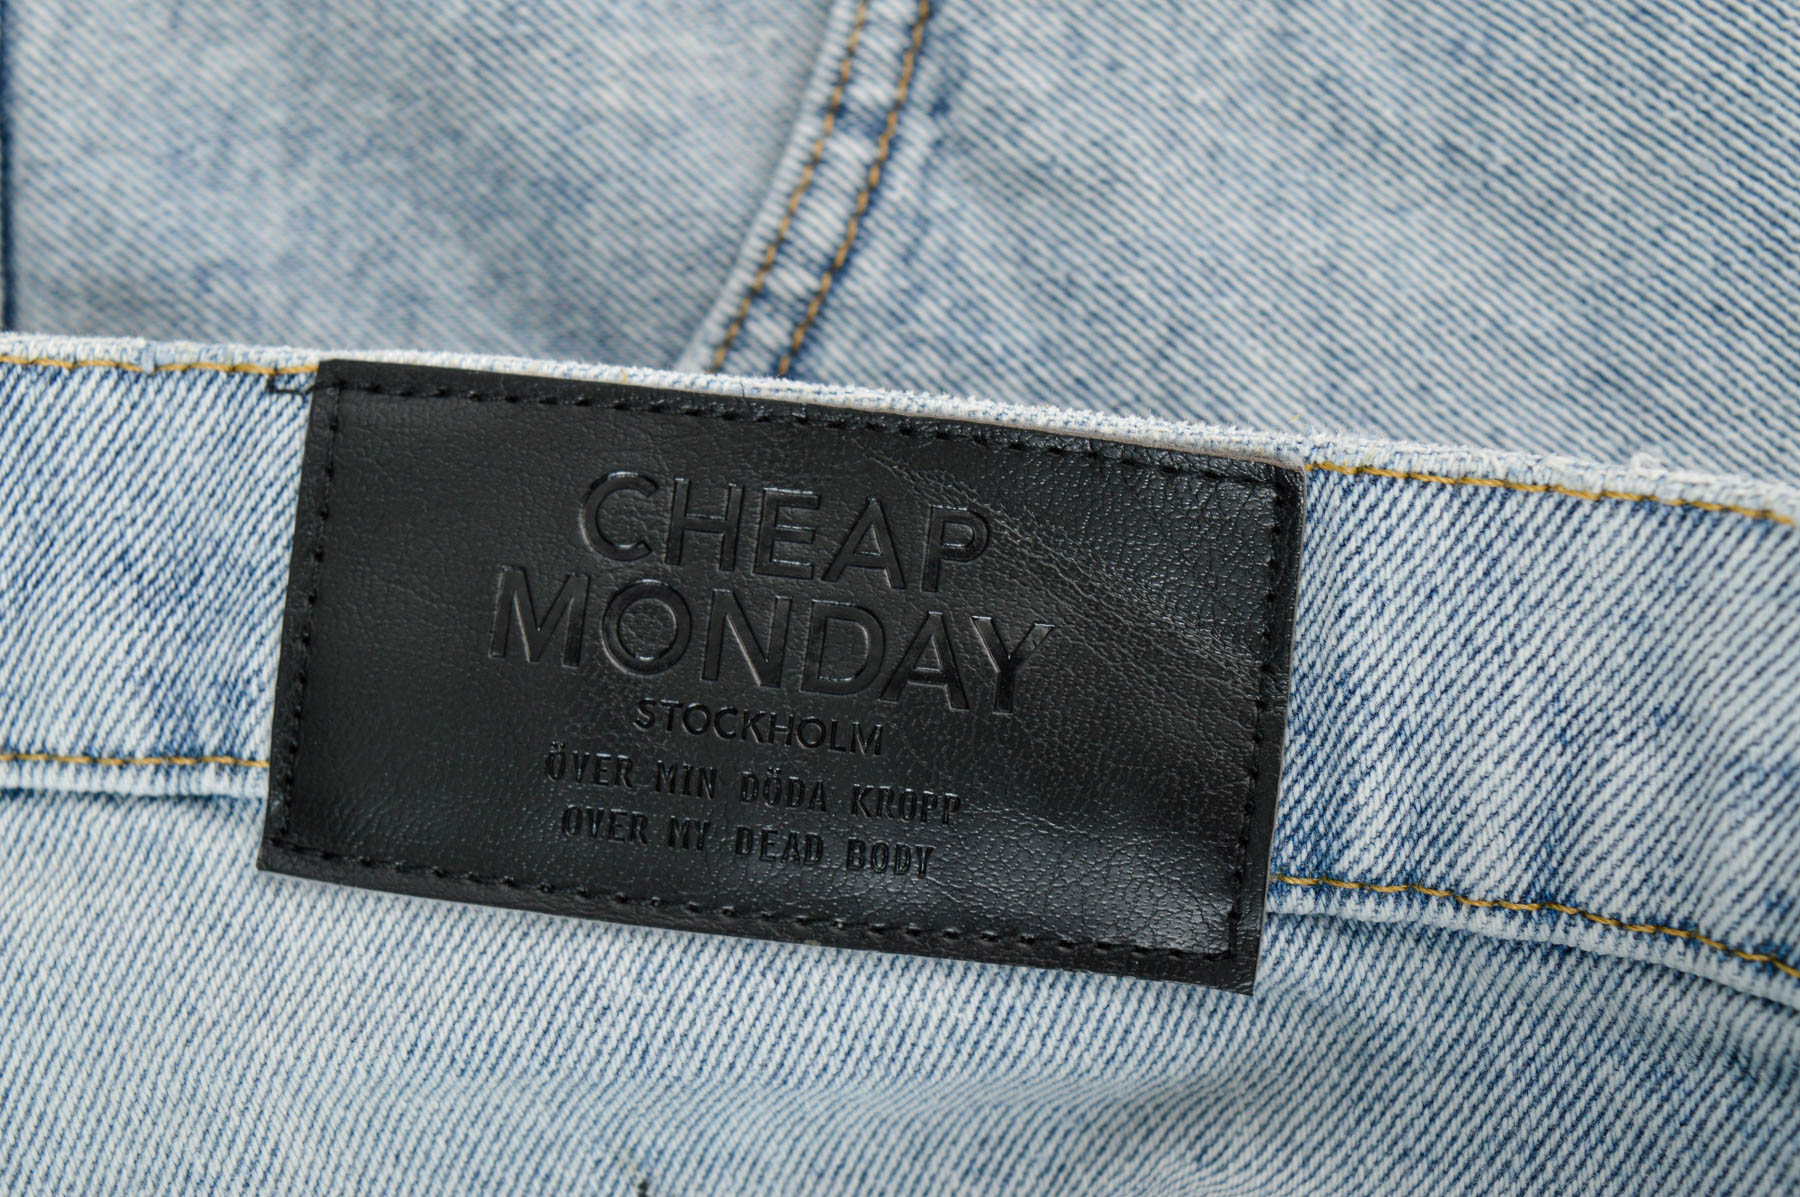 Men's jeans - Cheap Monday - 2